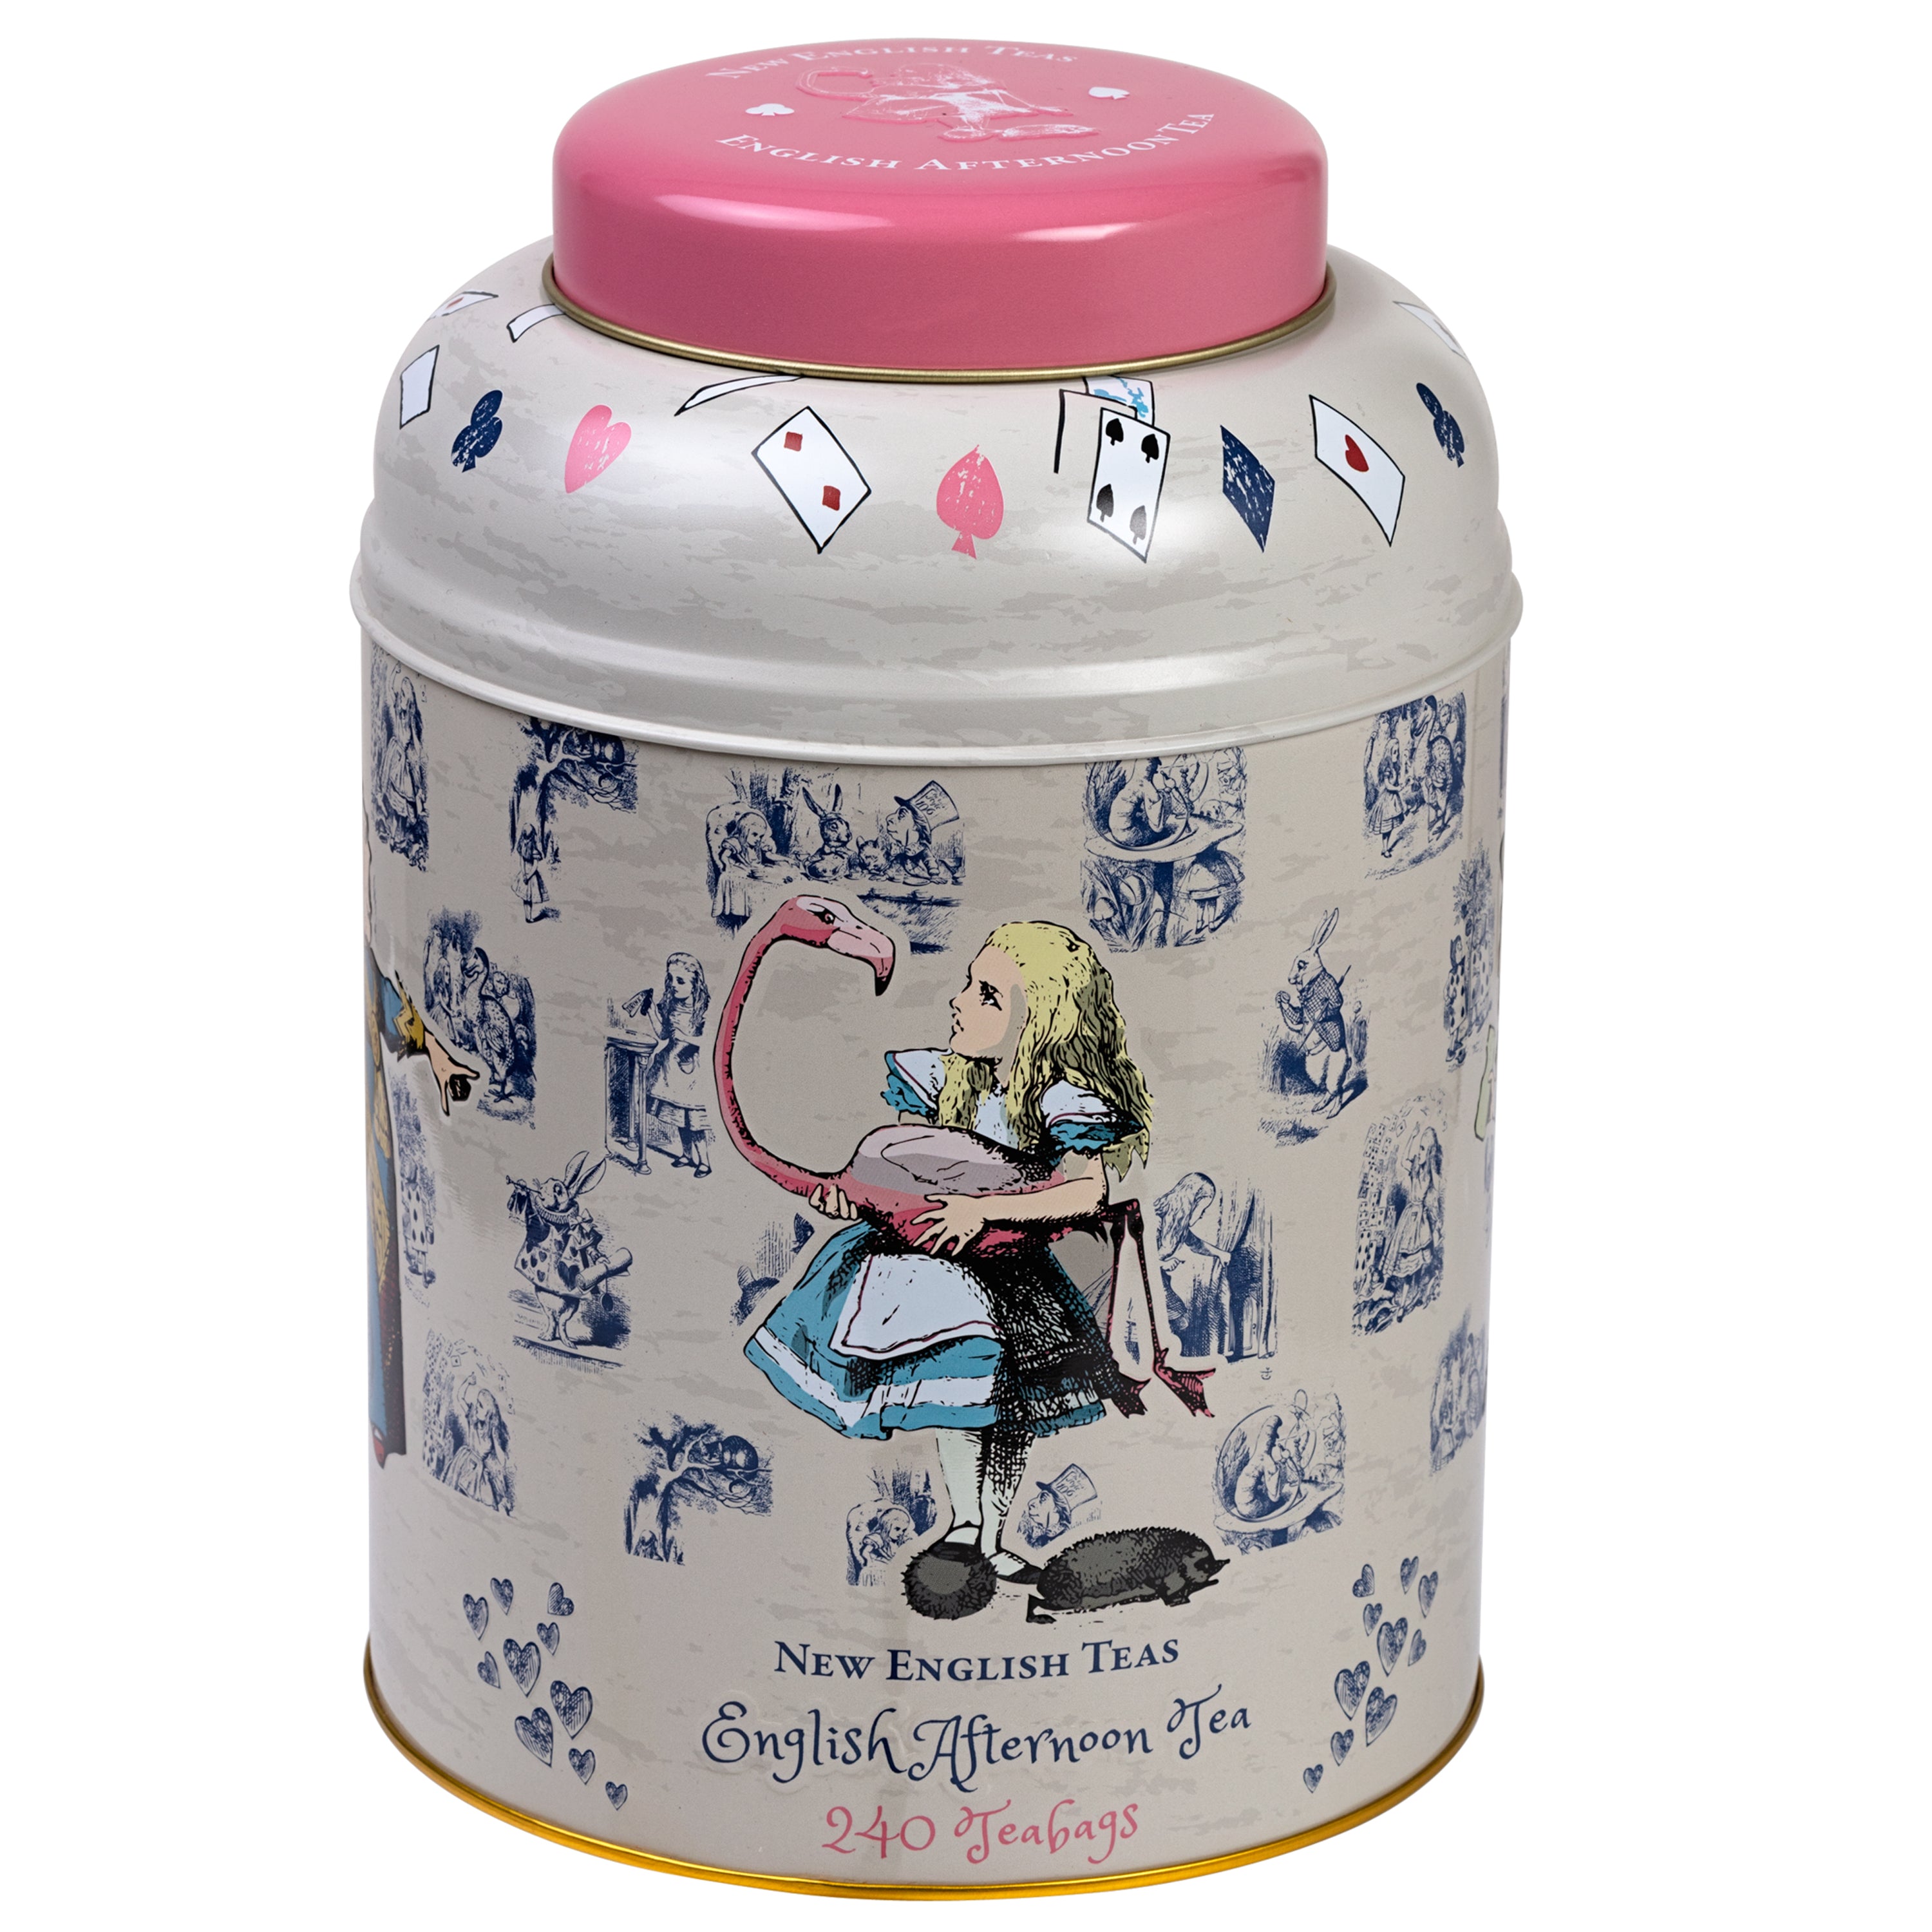 Vintage Alice in Wonderland Tea Caddy with 240 English Breakfast teabags Black Tea New English Teas 